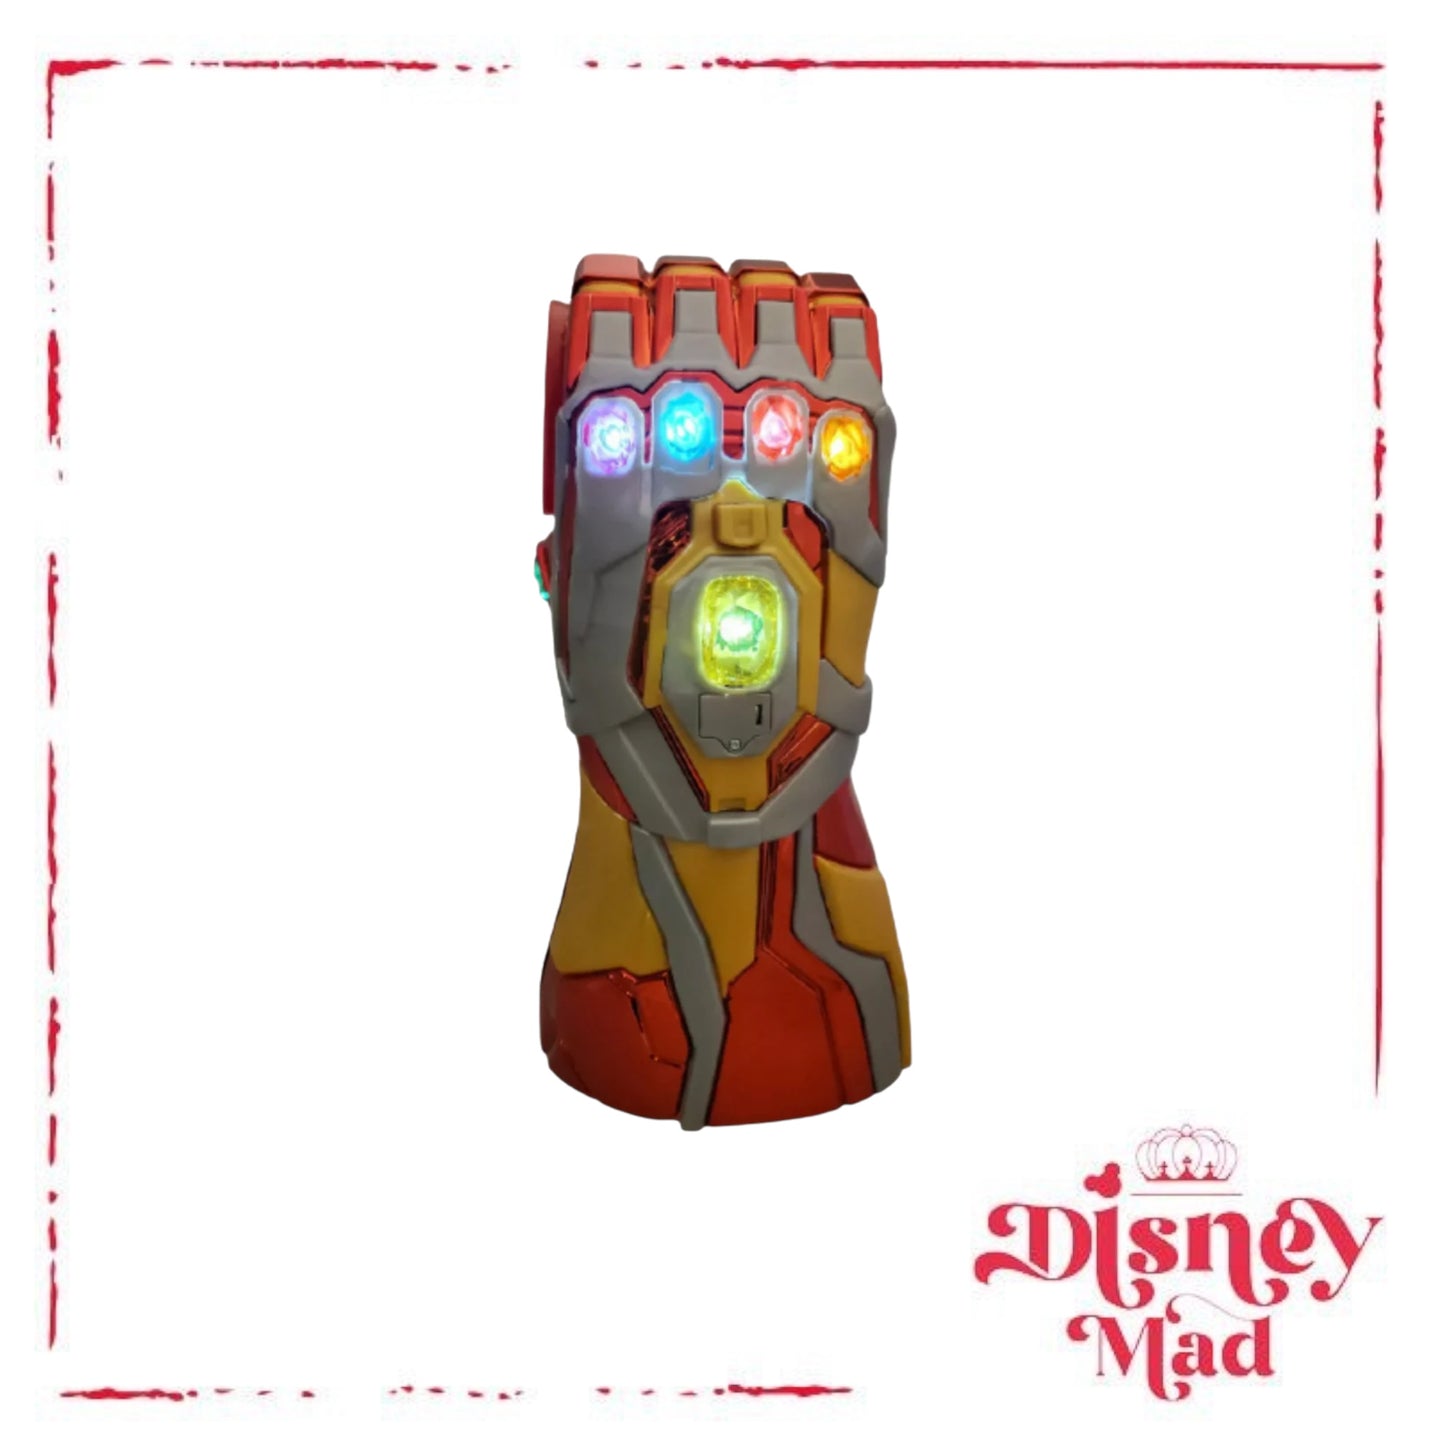 Disneyland Avengers Campus Iron Man Infinity Gauntlet Souvenir Cup Holder - Disney Parks